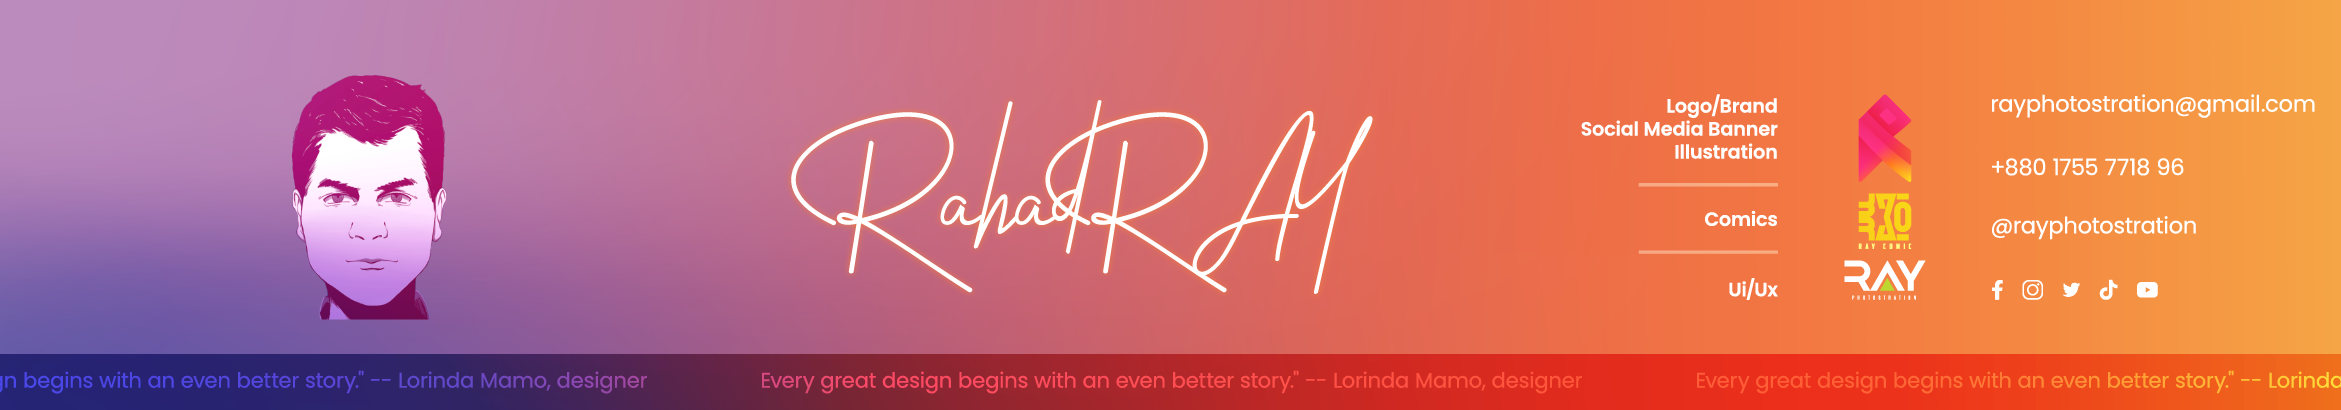 Rahat Al Yeasin (RAY)'s profile banner